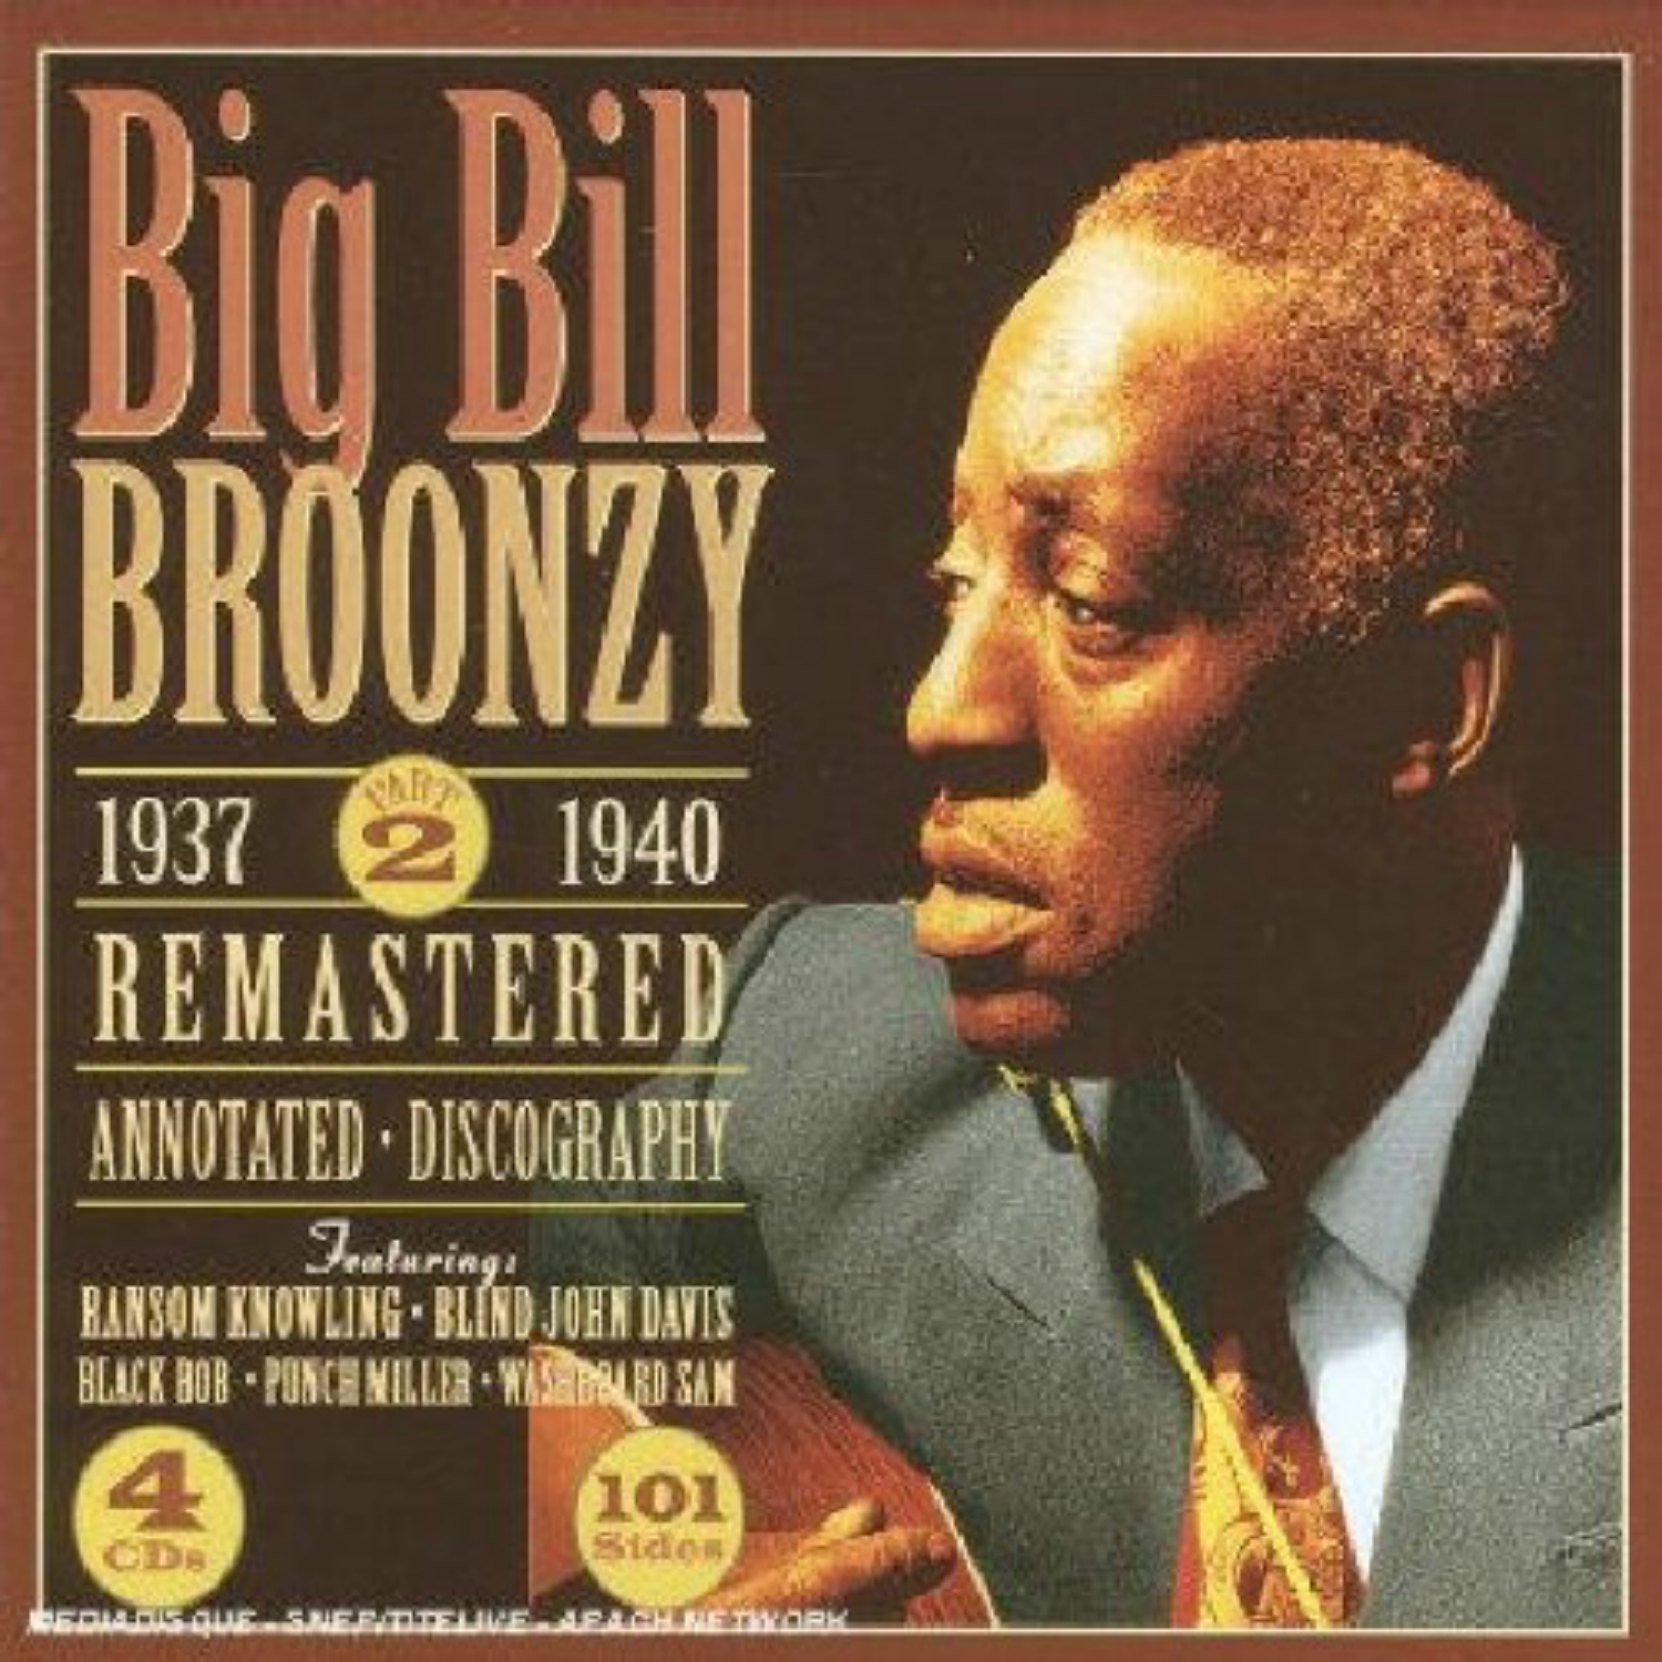 CD cover. Big Bill Broonzy, 1937-40, on JSP Records